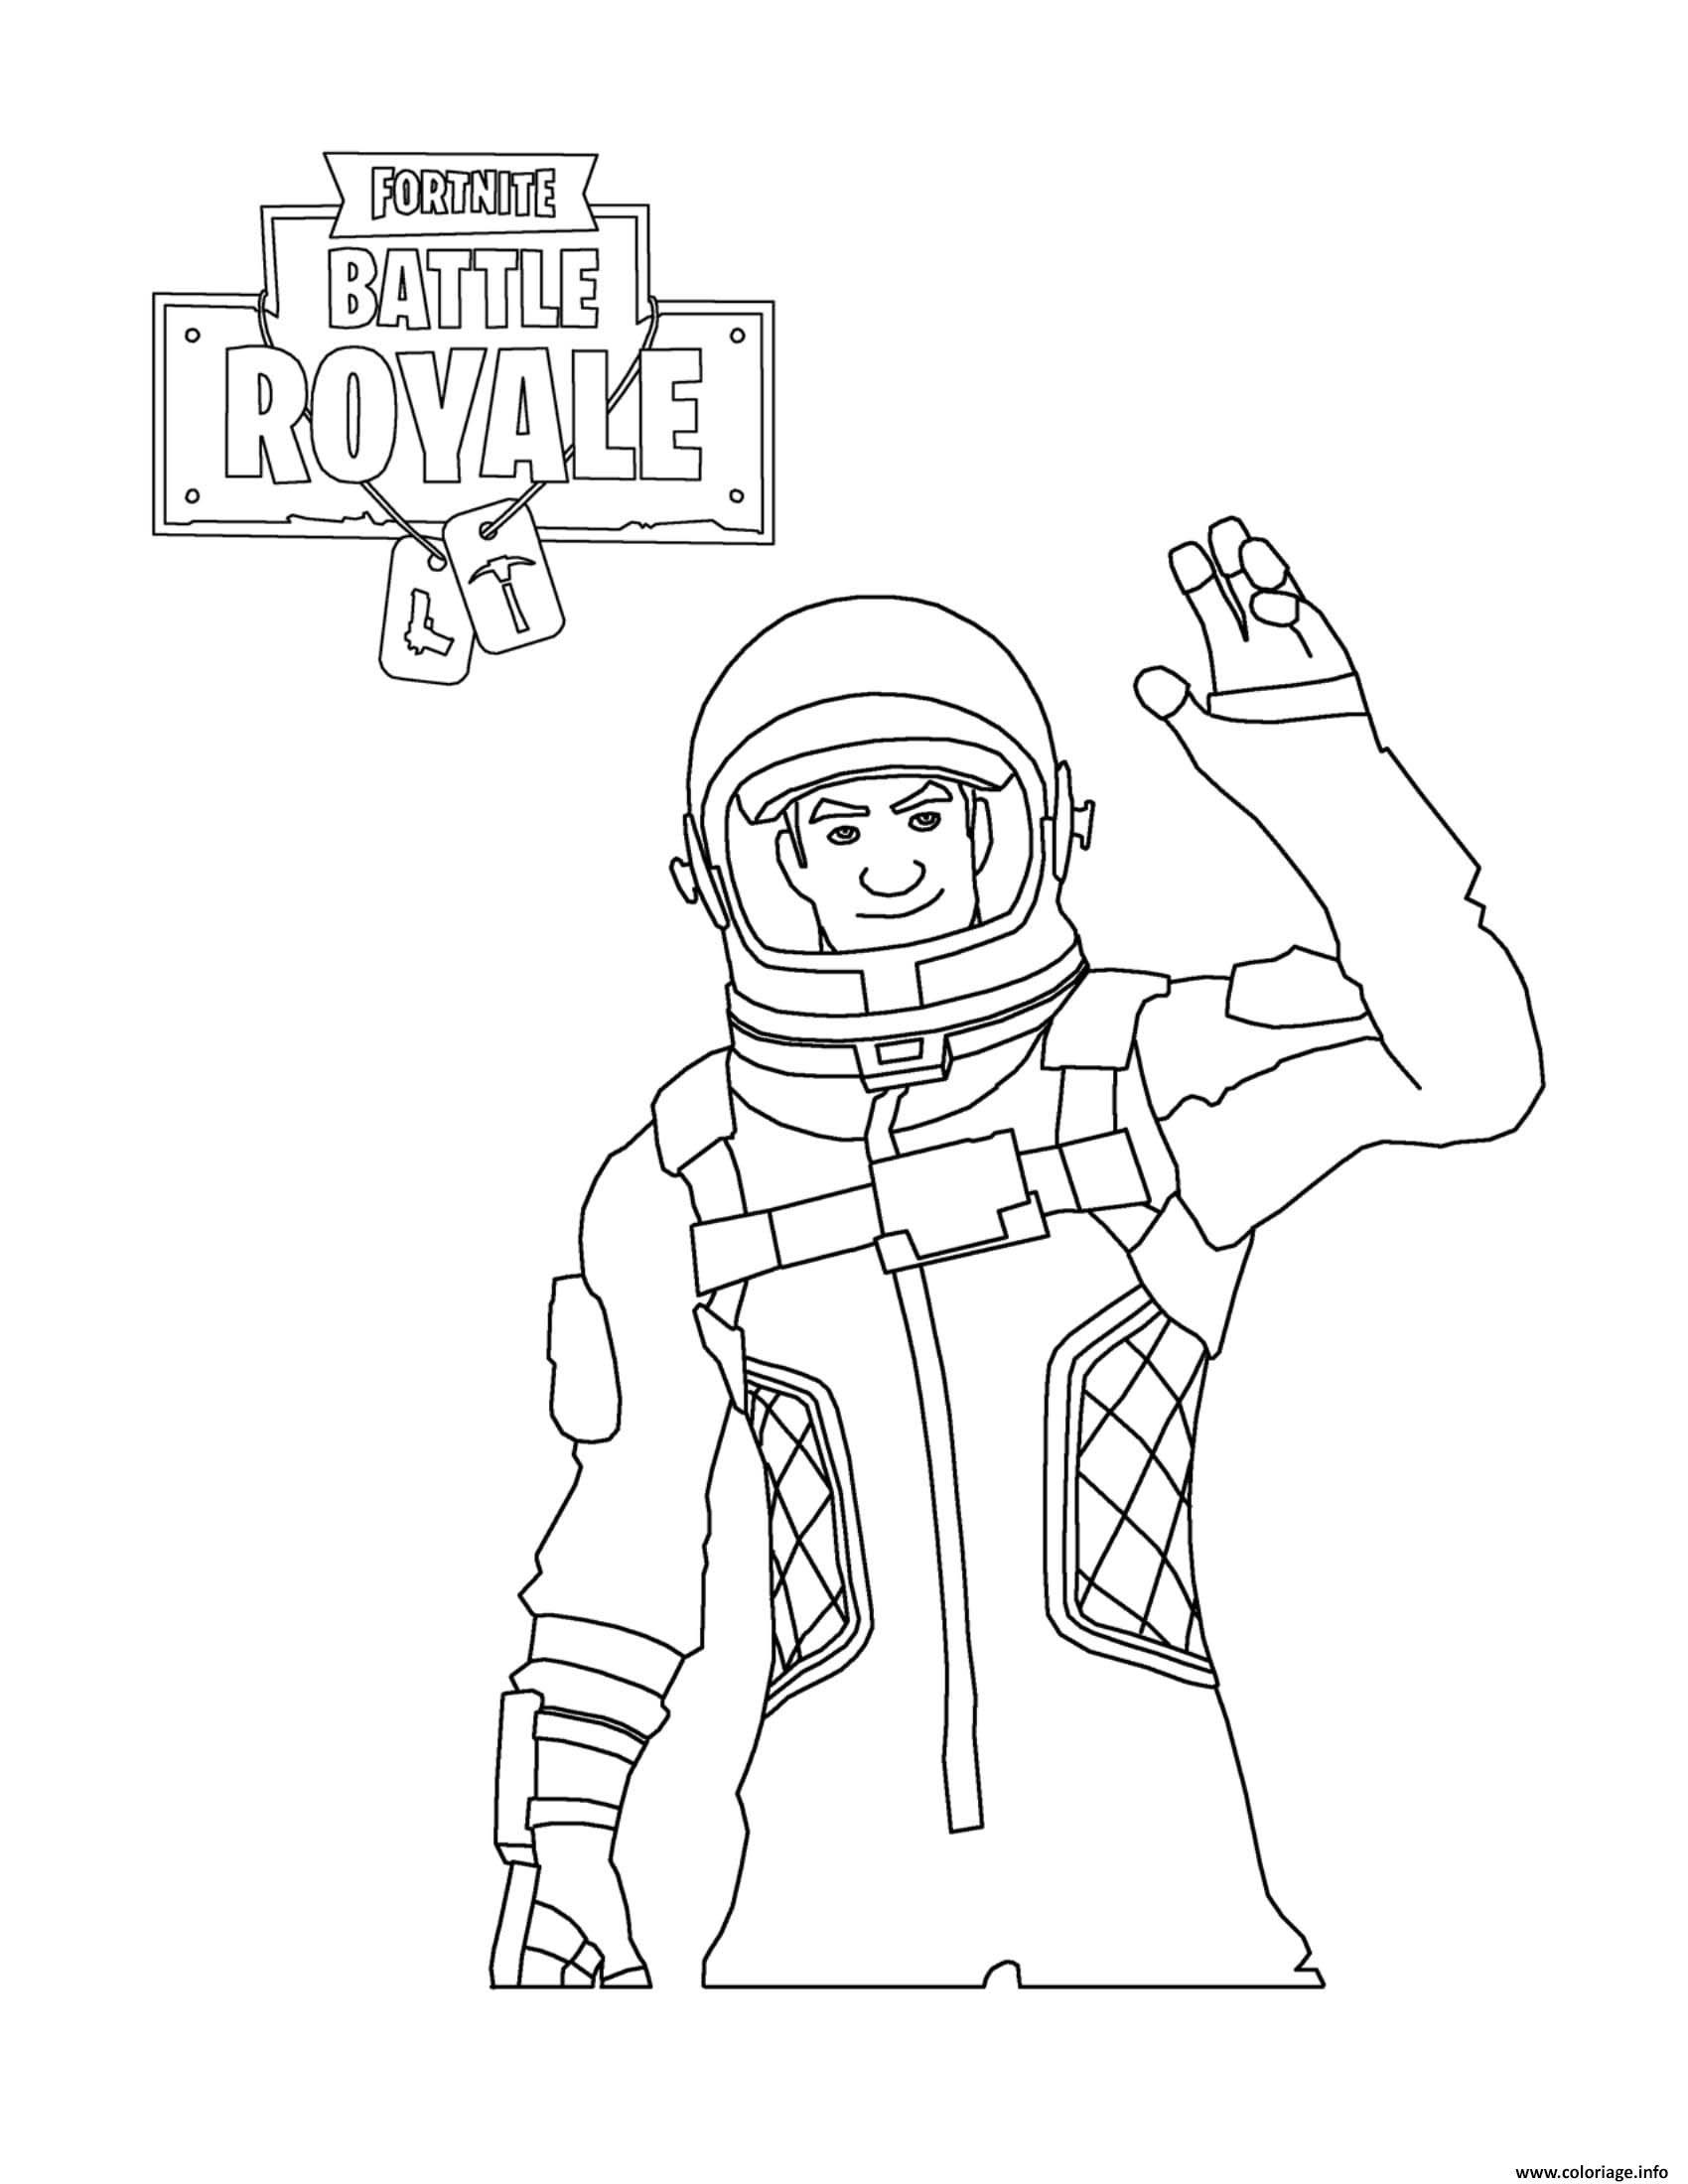 Coloring Fortnite Battle Royale Logo - Fortnite Battle Royale : Astronaut - Fortnite Battle Royale Kids ...